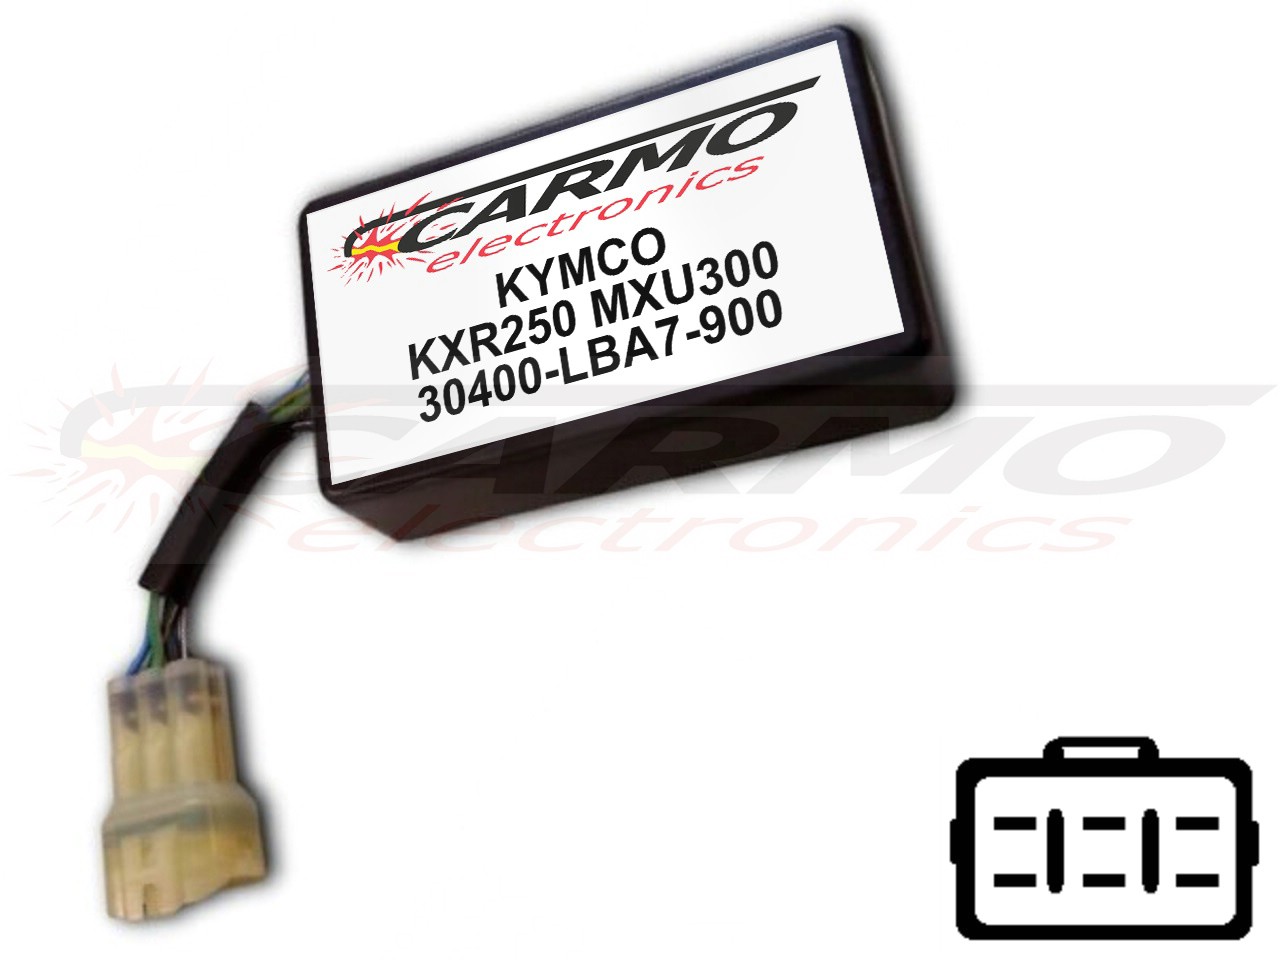 Kymco KXR250 MXU250 igniter ignition module CDI TCI Box (30400-LBA7-900, CT-LBA7-00) - Clique na Imagem para Fechar